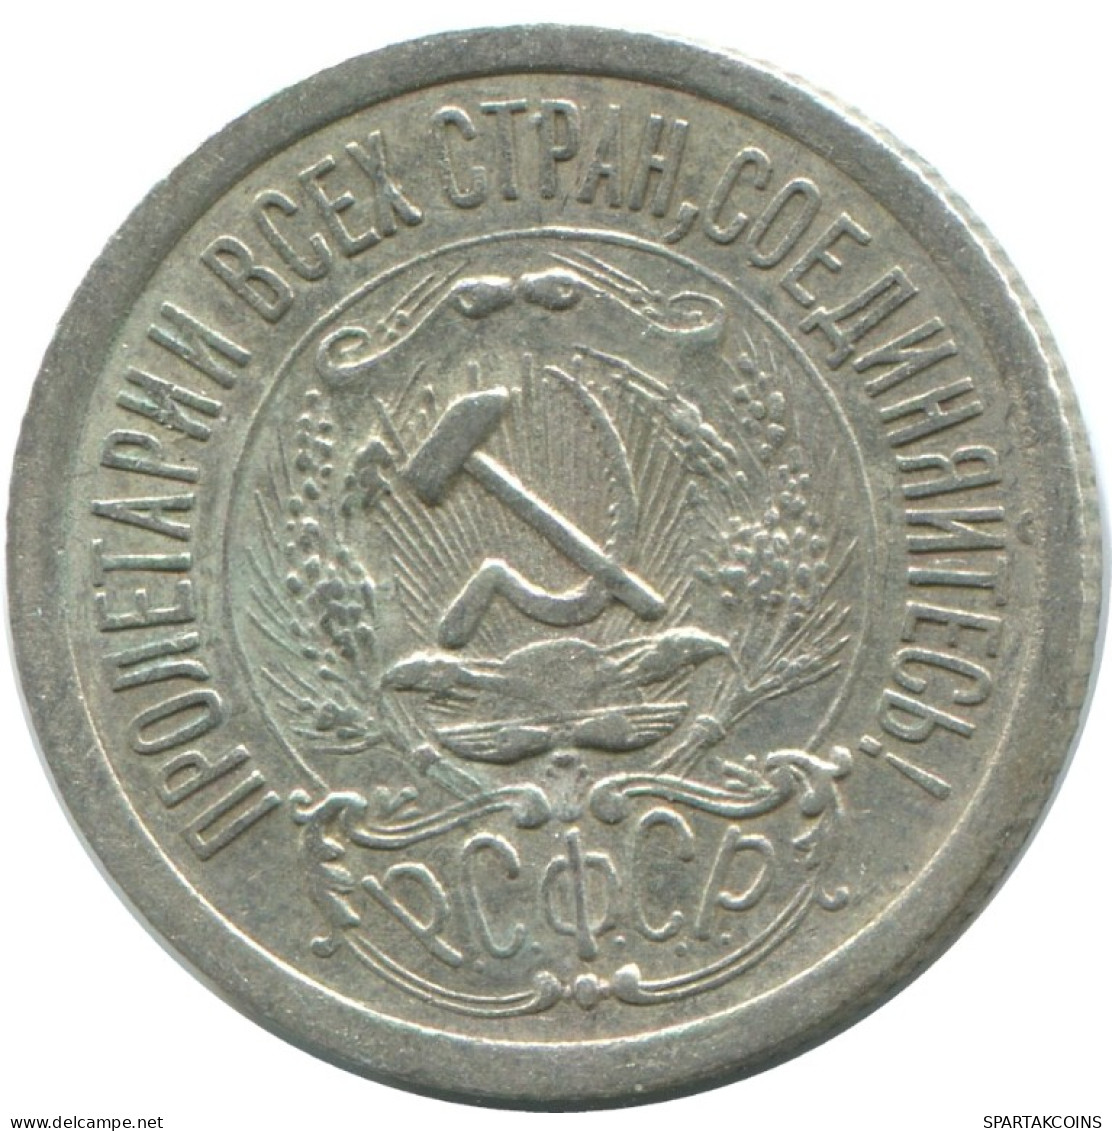 15 KOPEKS 1923 RUSSIA RSFSR SILVER Coin HIGH GRADE #AF103.4.U.A - Russia